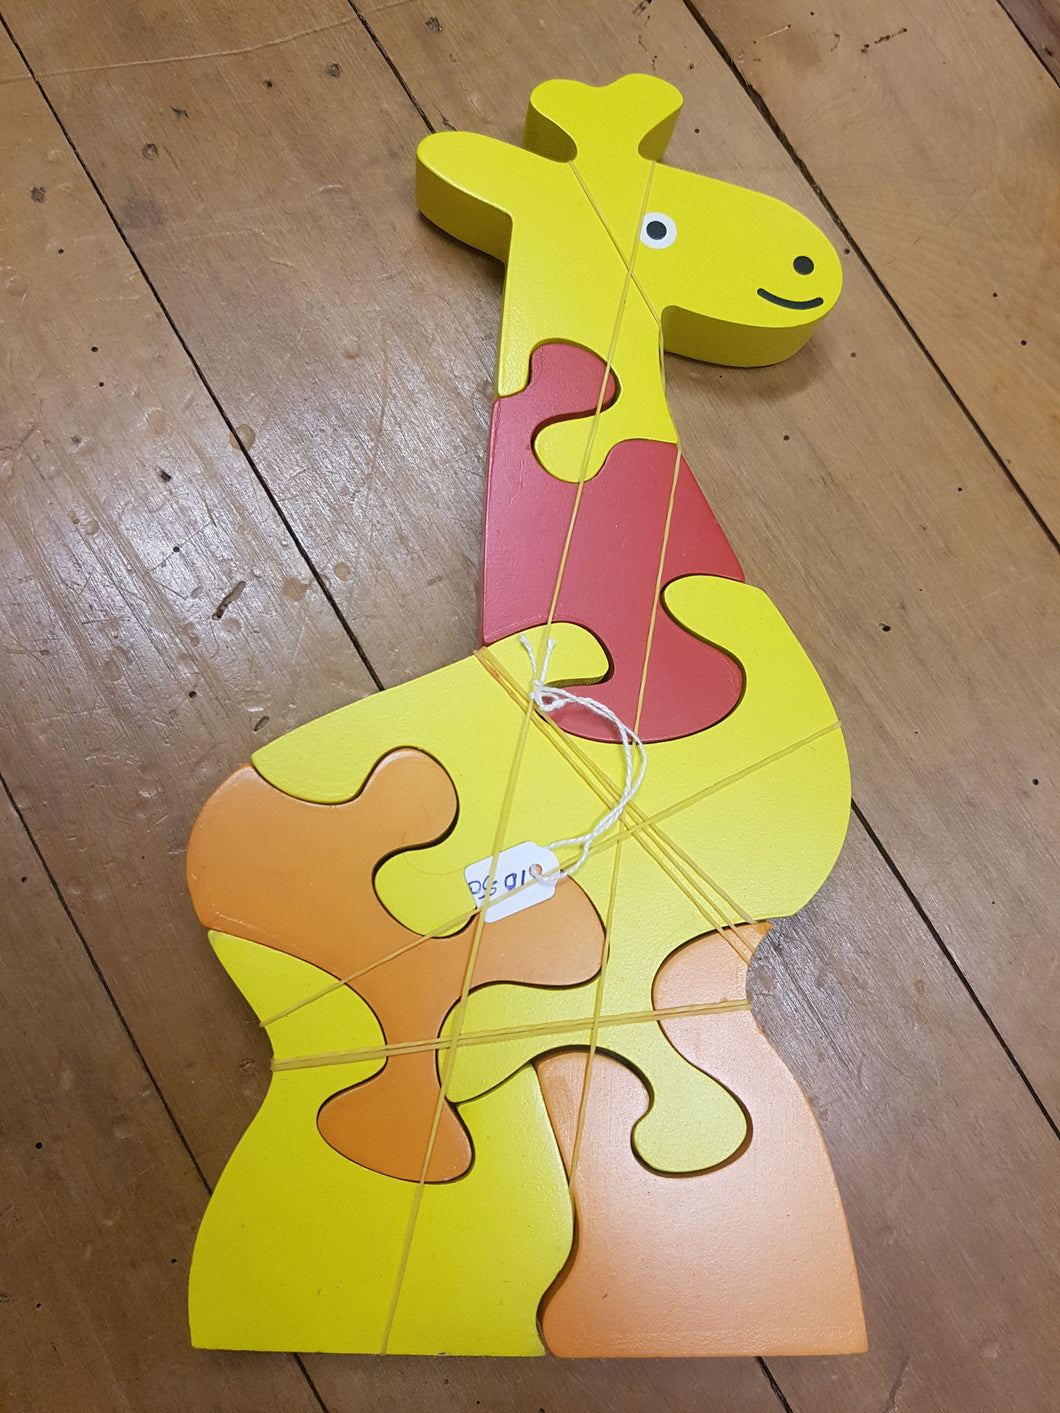 Wooden Giraffe Puzzle